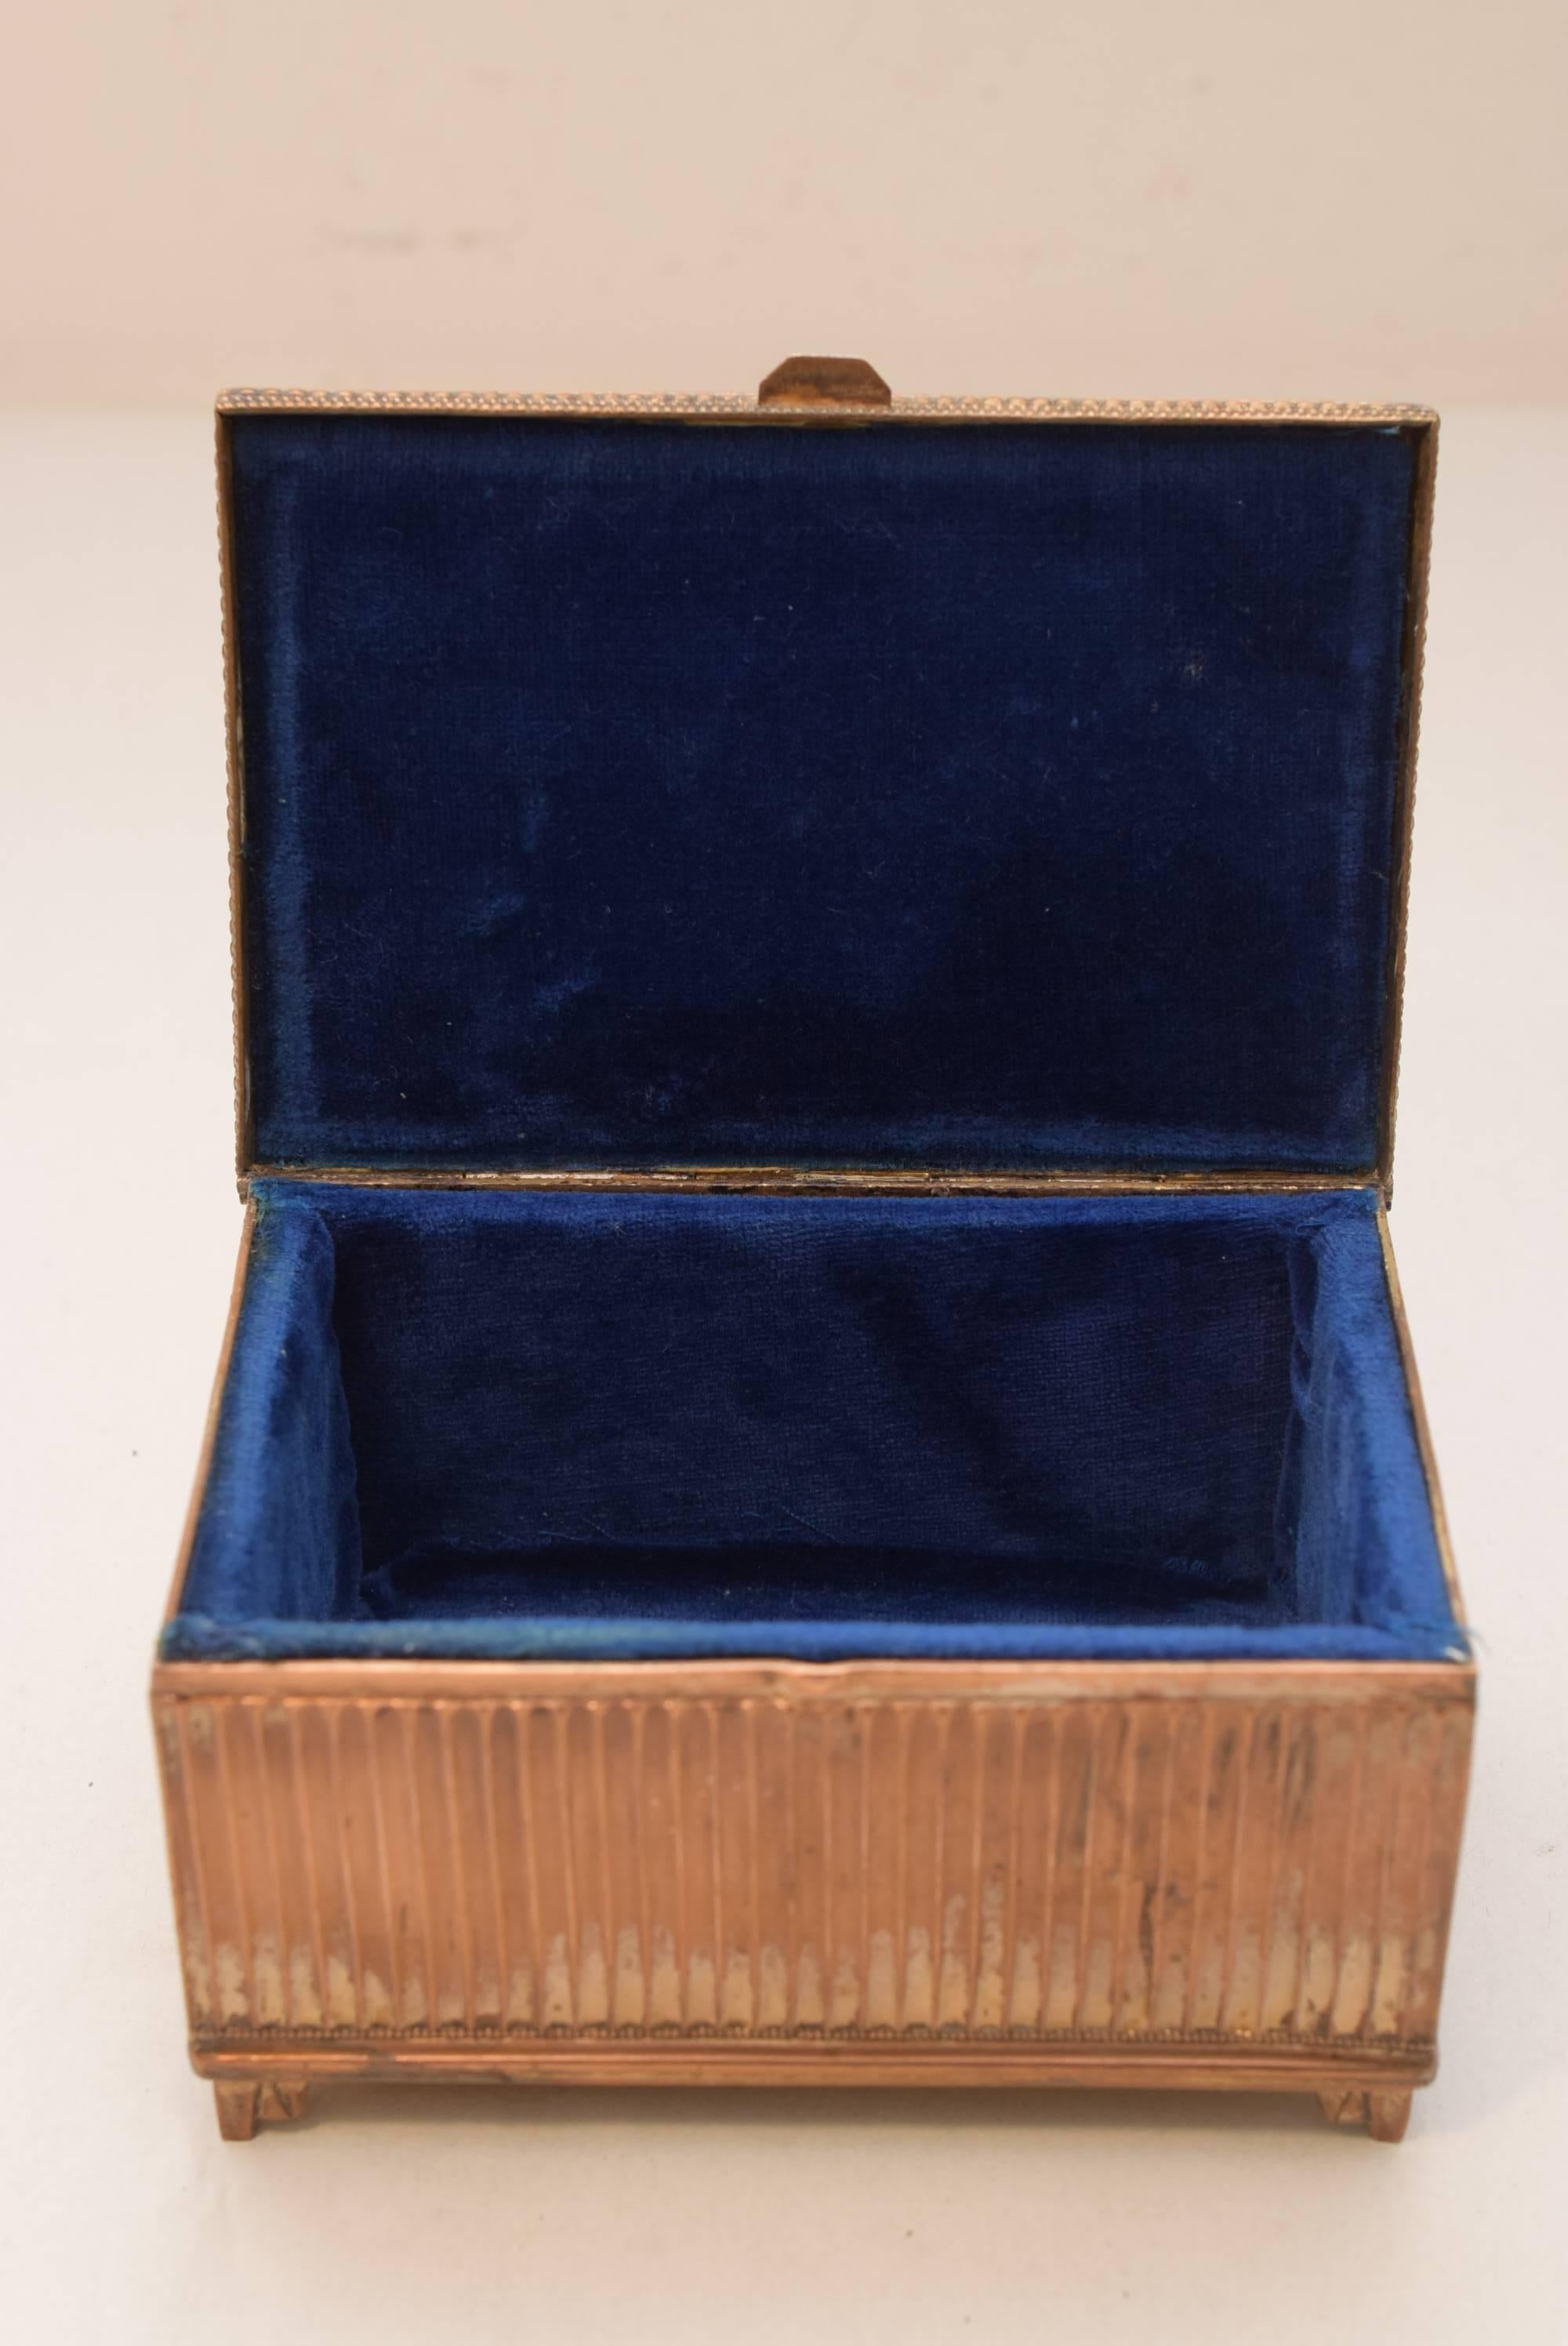 Early 20th Century Art Deco Jewelry Box